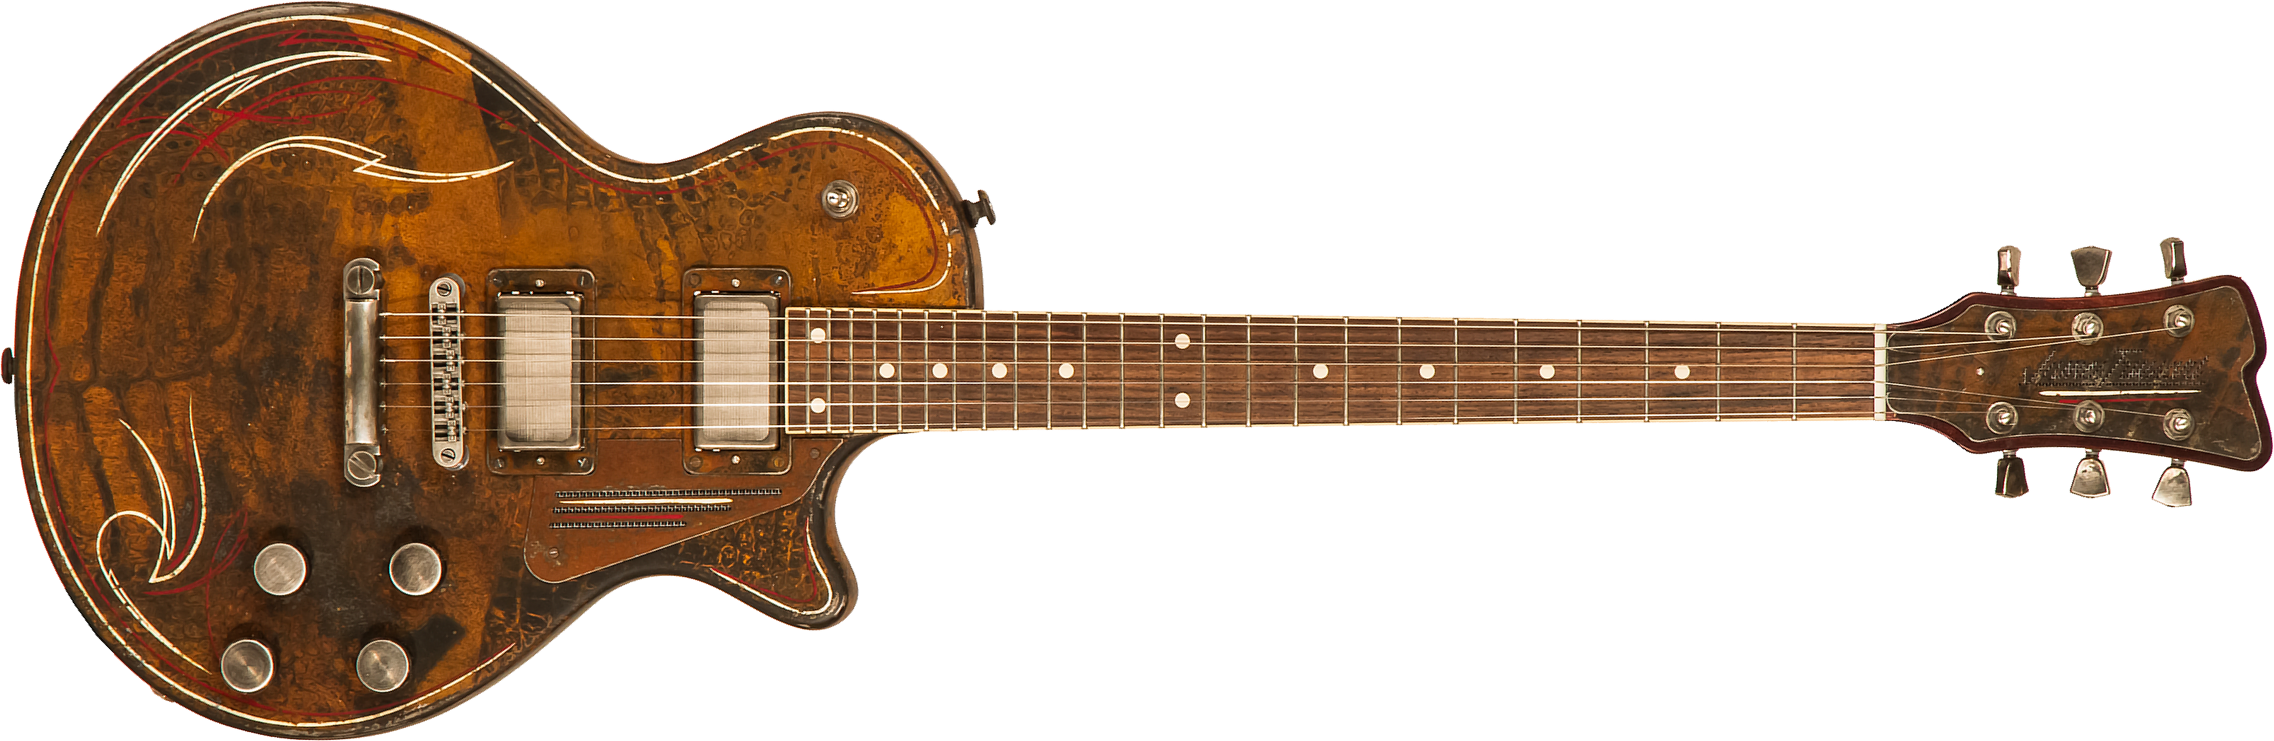 James Trussart Steeldeville Perf.back 2h Ht Rw #21171 - Rust O Matic Pinstriped - Single-Cut-E-Gitarre - Main picture